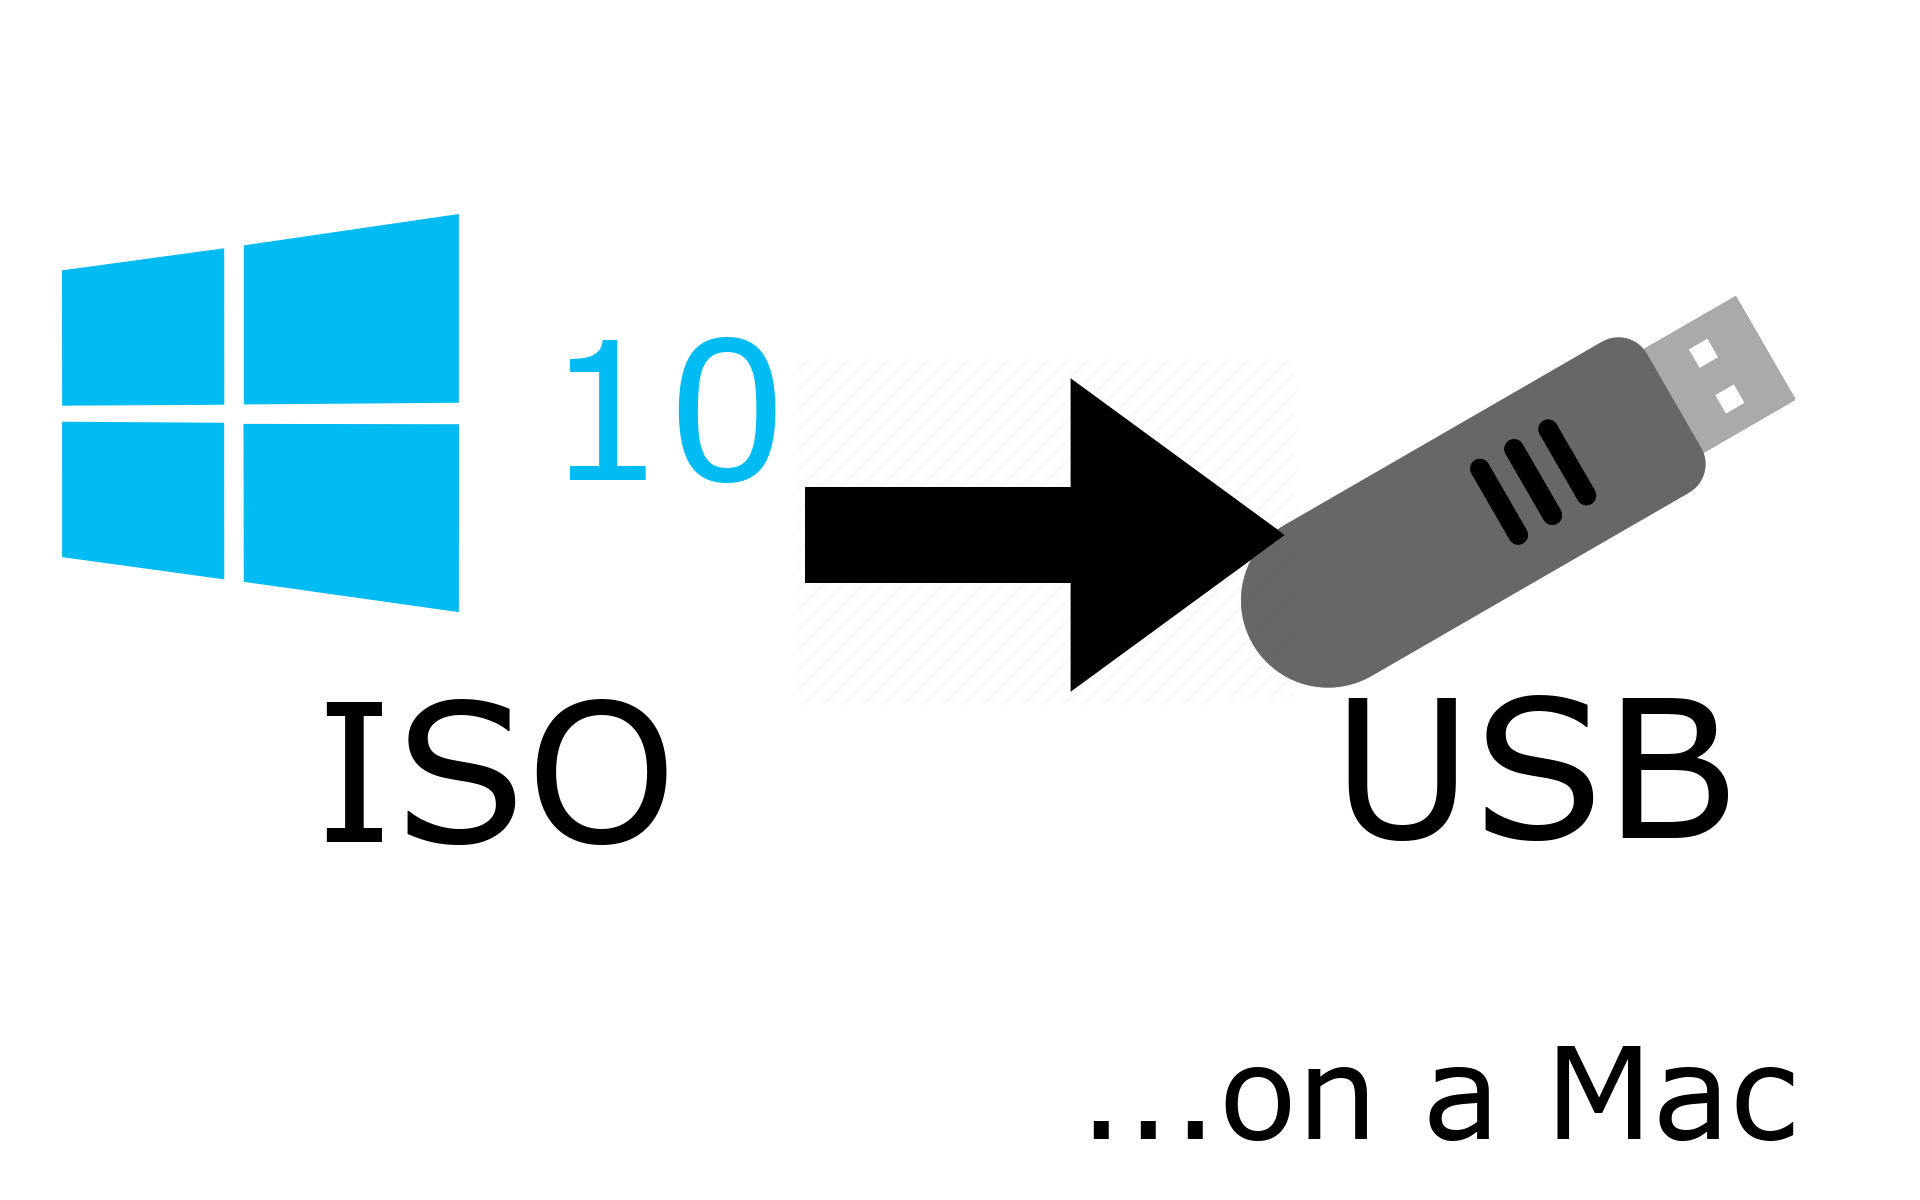 Burn a Windows 10 ISO to a USB drive on a Mac